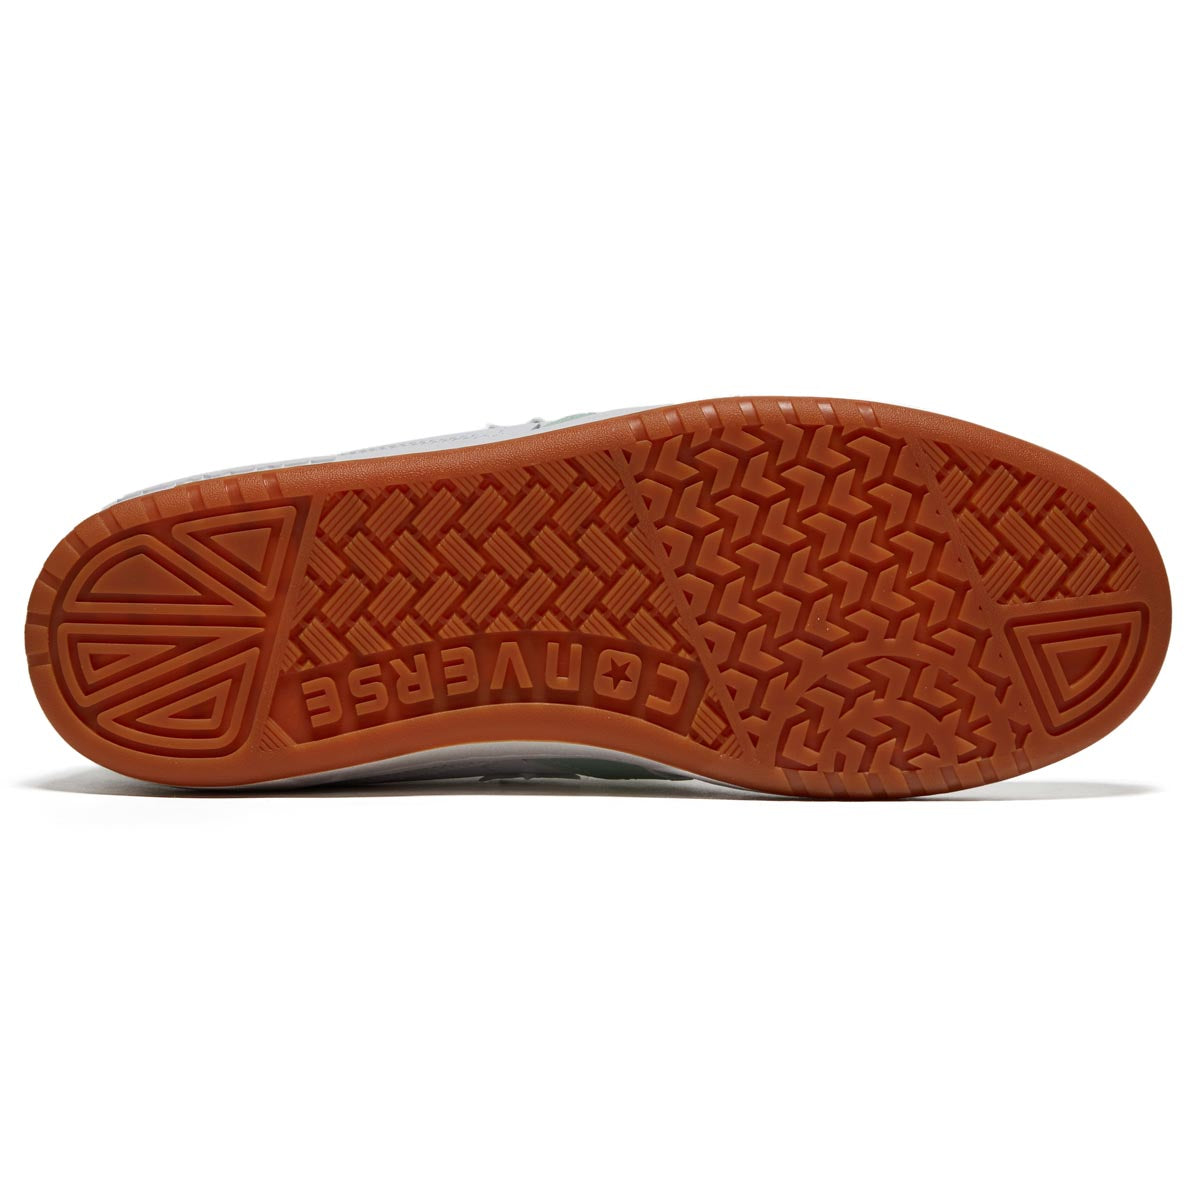 Converse Fastbreak Pro Leather Mid Shoes - White/Sticky Aloe/Gum Honey image 4